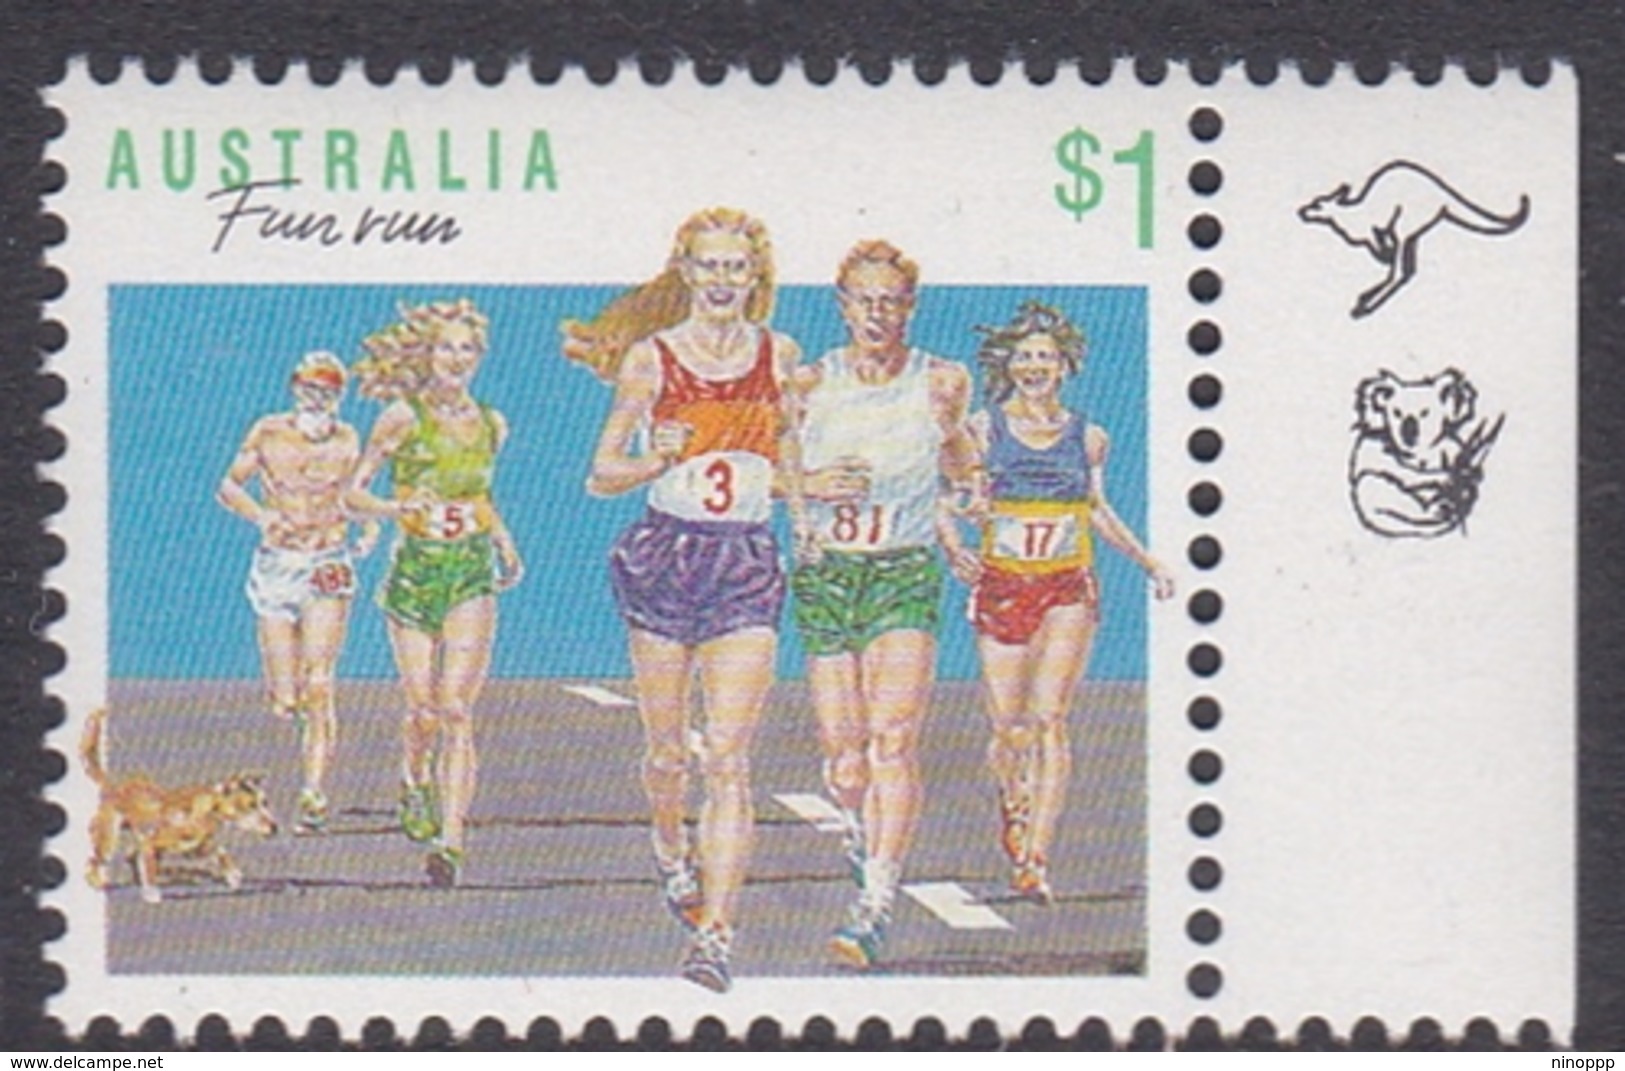 Australia ASC 1231g 1990 Sports $ 1.00 Fun Run 1 Roo +1 Koala, Mint Never Hinged - Prove & Ristampe